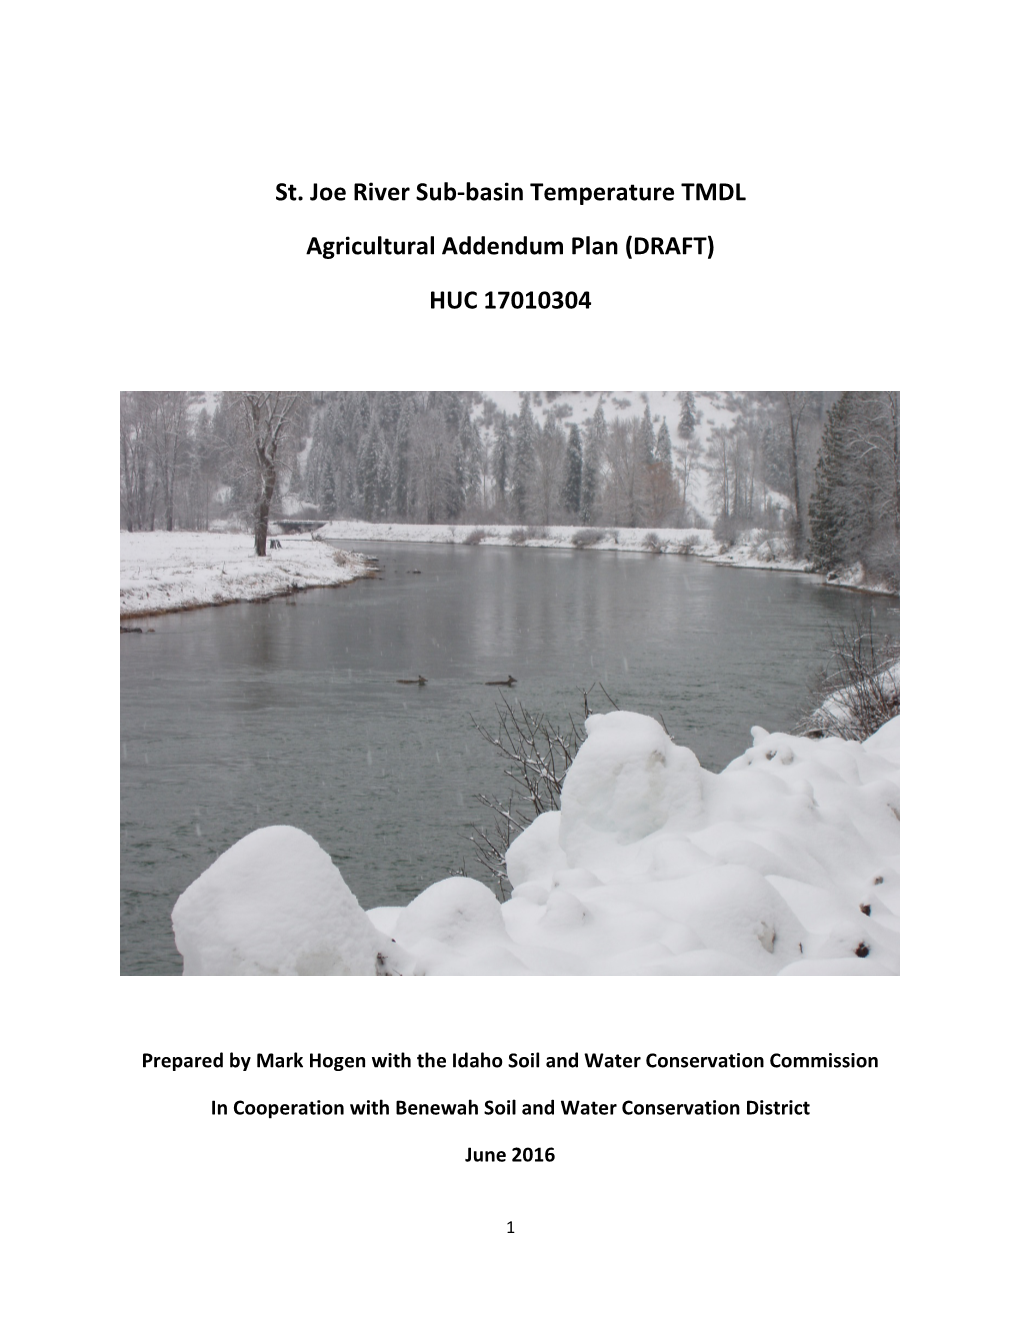 St. Joe River Sub-Basin Temperature TMDL Agricultural Addendum Plan (DRAFT) HUC 17010304